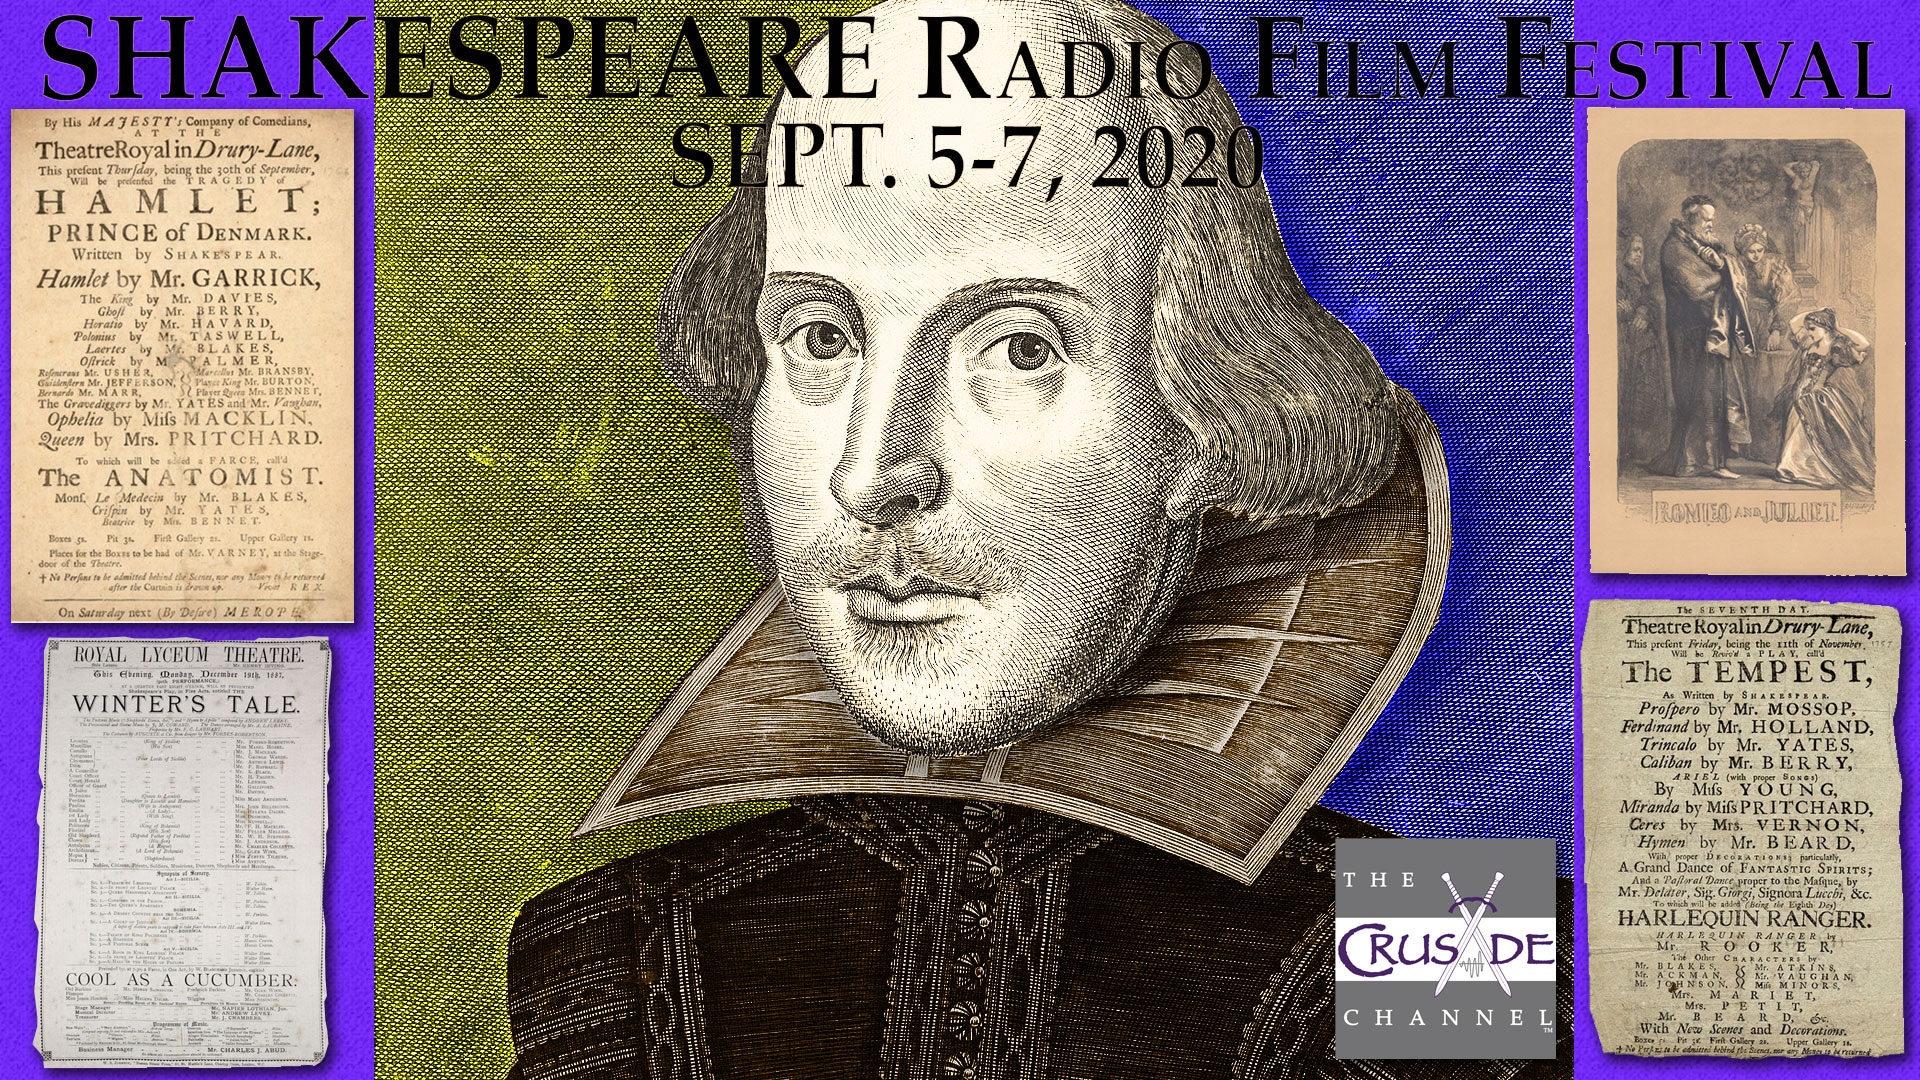 Antony and Cleopatra-Shakespeare Radio Film Fest